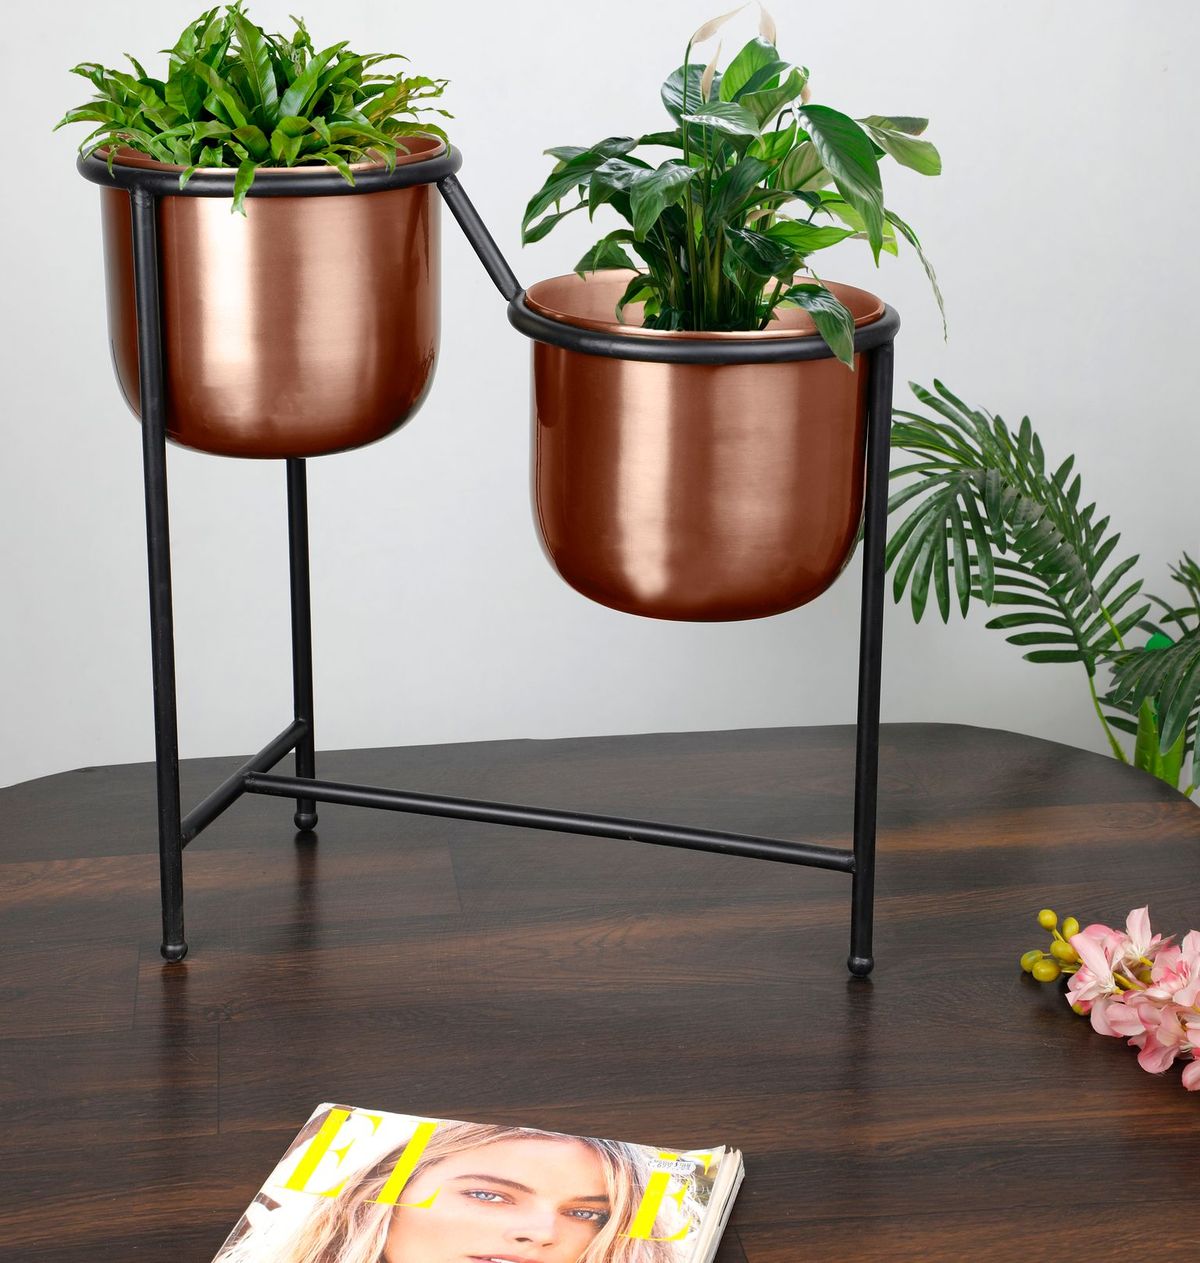 Steps Indoor Desk Metal Planter Pot With Stand